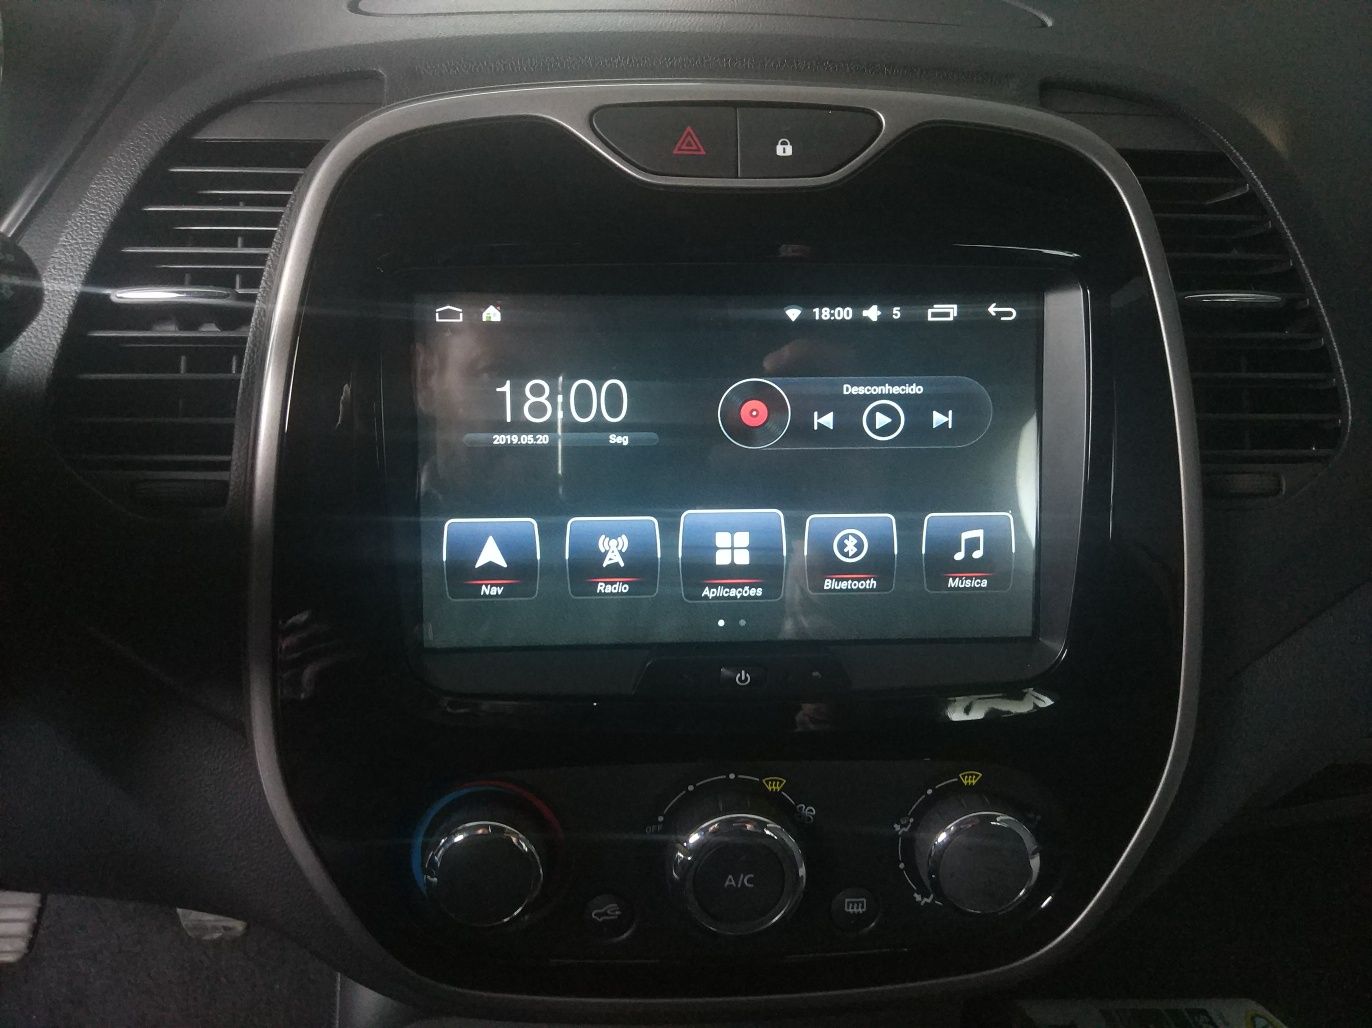 Auto Rádio Renault Clio 4 Captur Dacia GPS Bluetooth USB Android